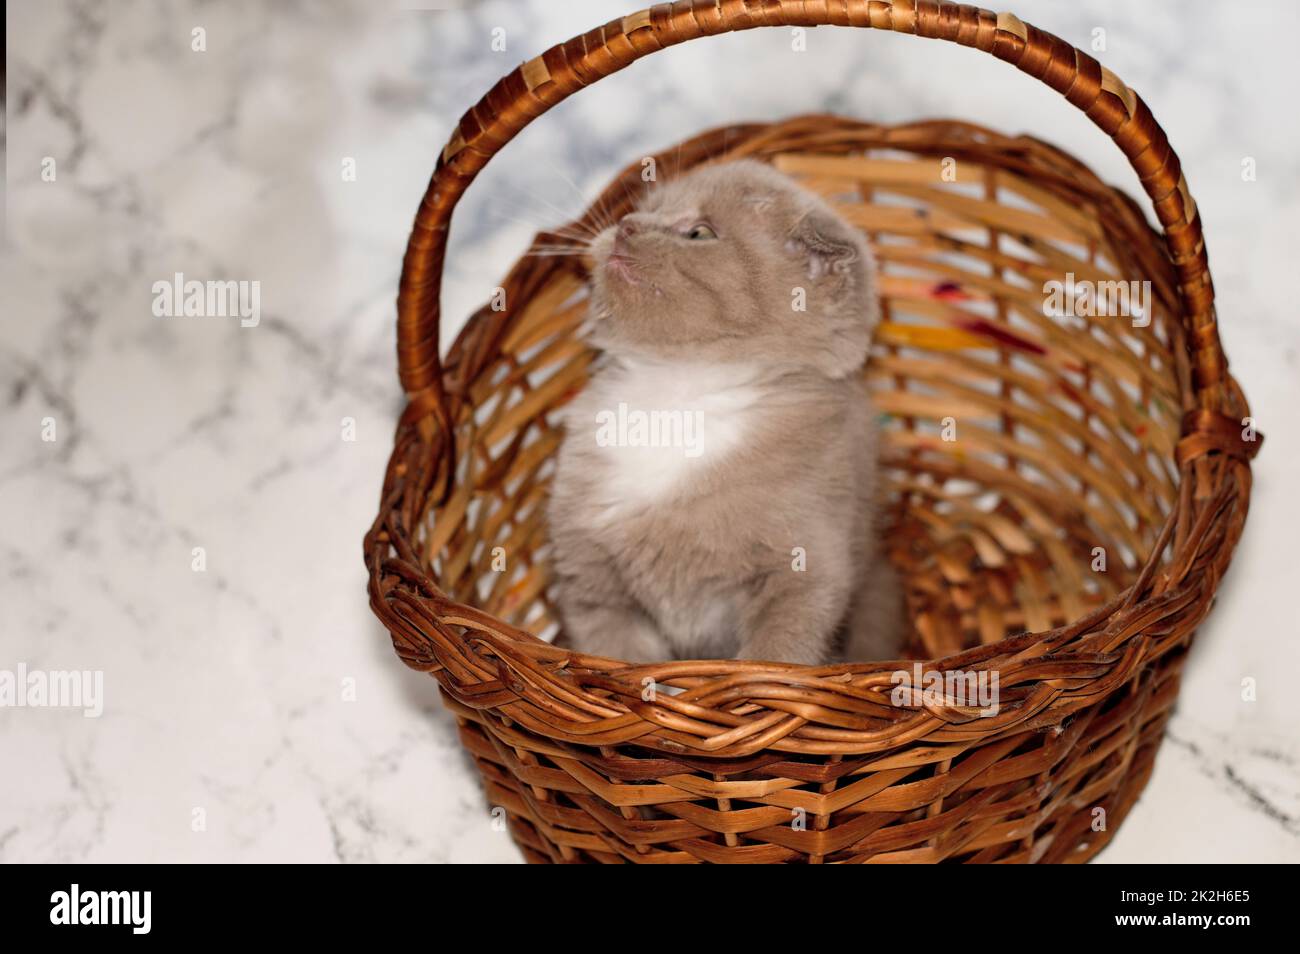 small lilac Scottish kitten in a wicker basket Stock Photo